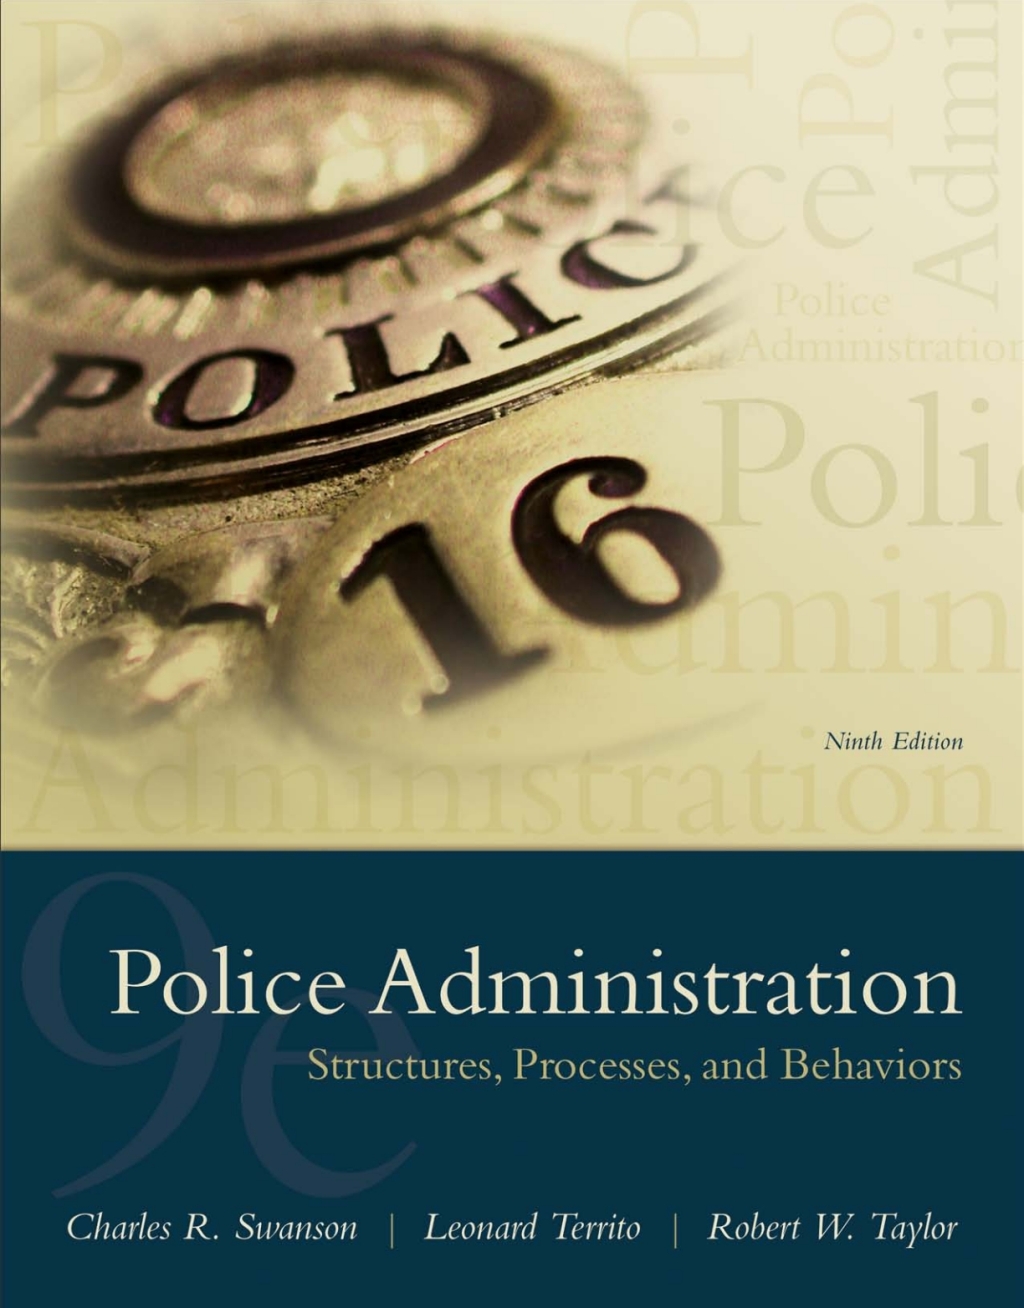 Police Administration (eBook) - Charles R. Swanson; Leonard J. Territo; Robert W. Taylor